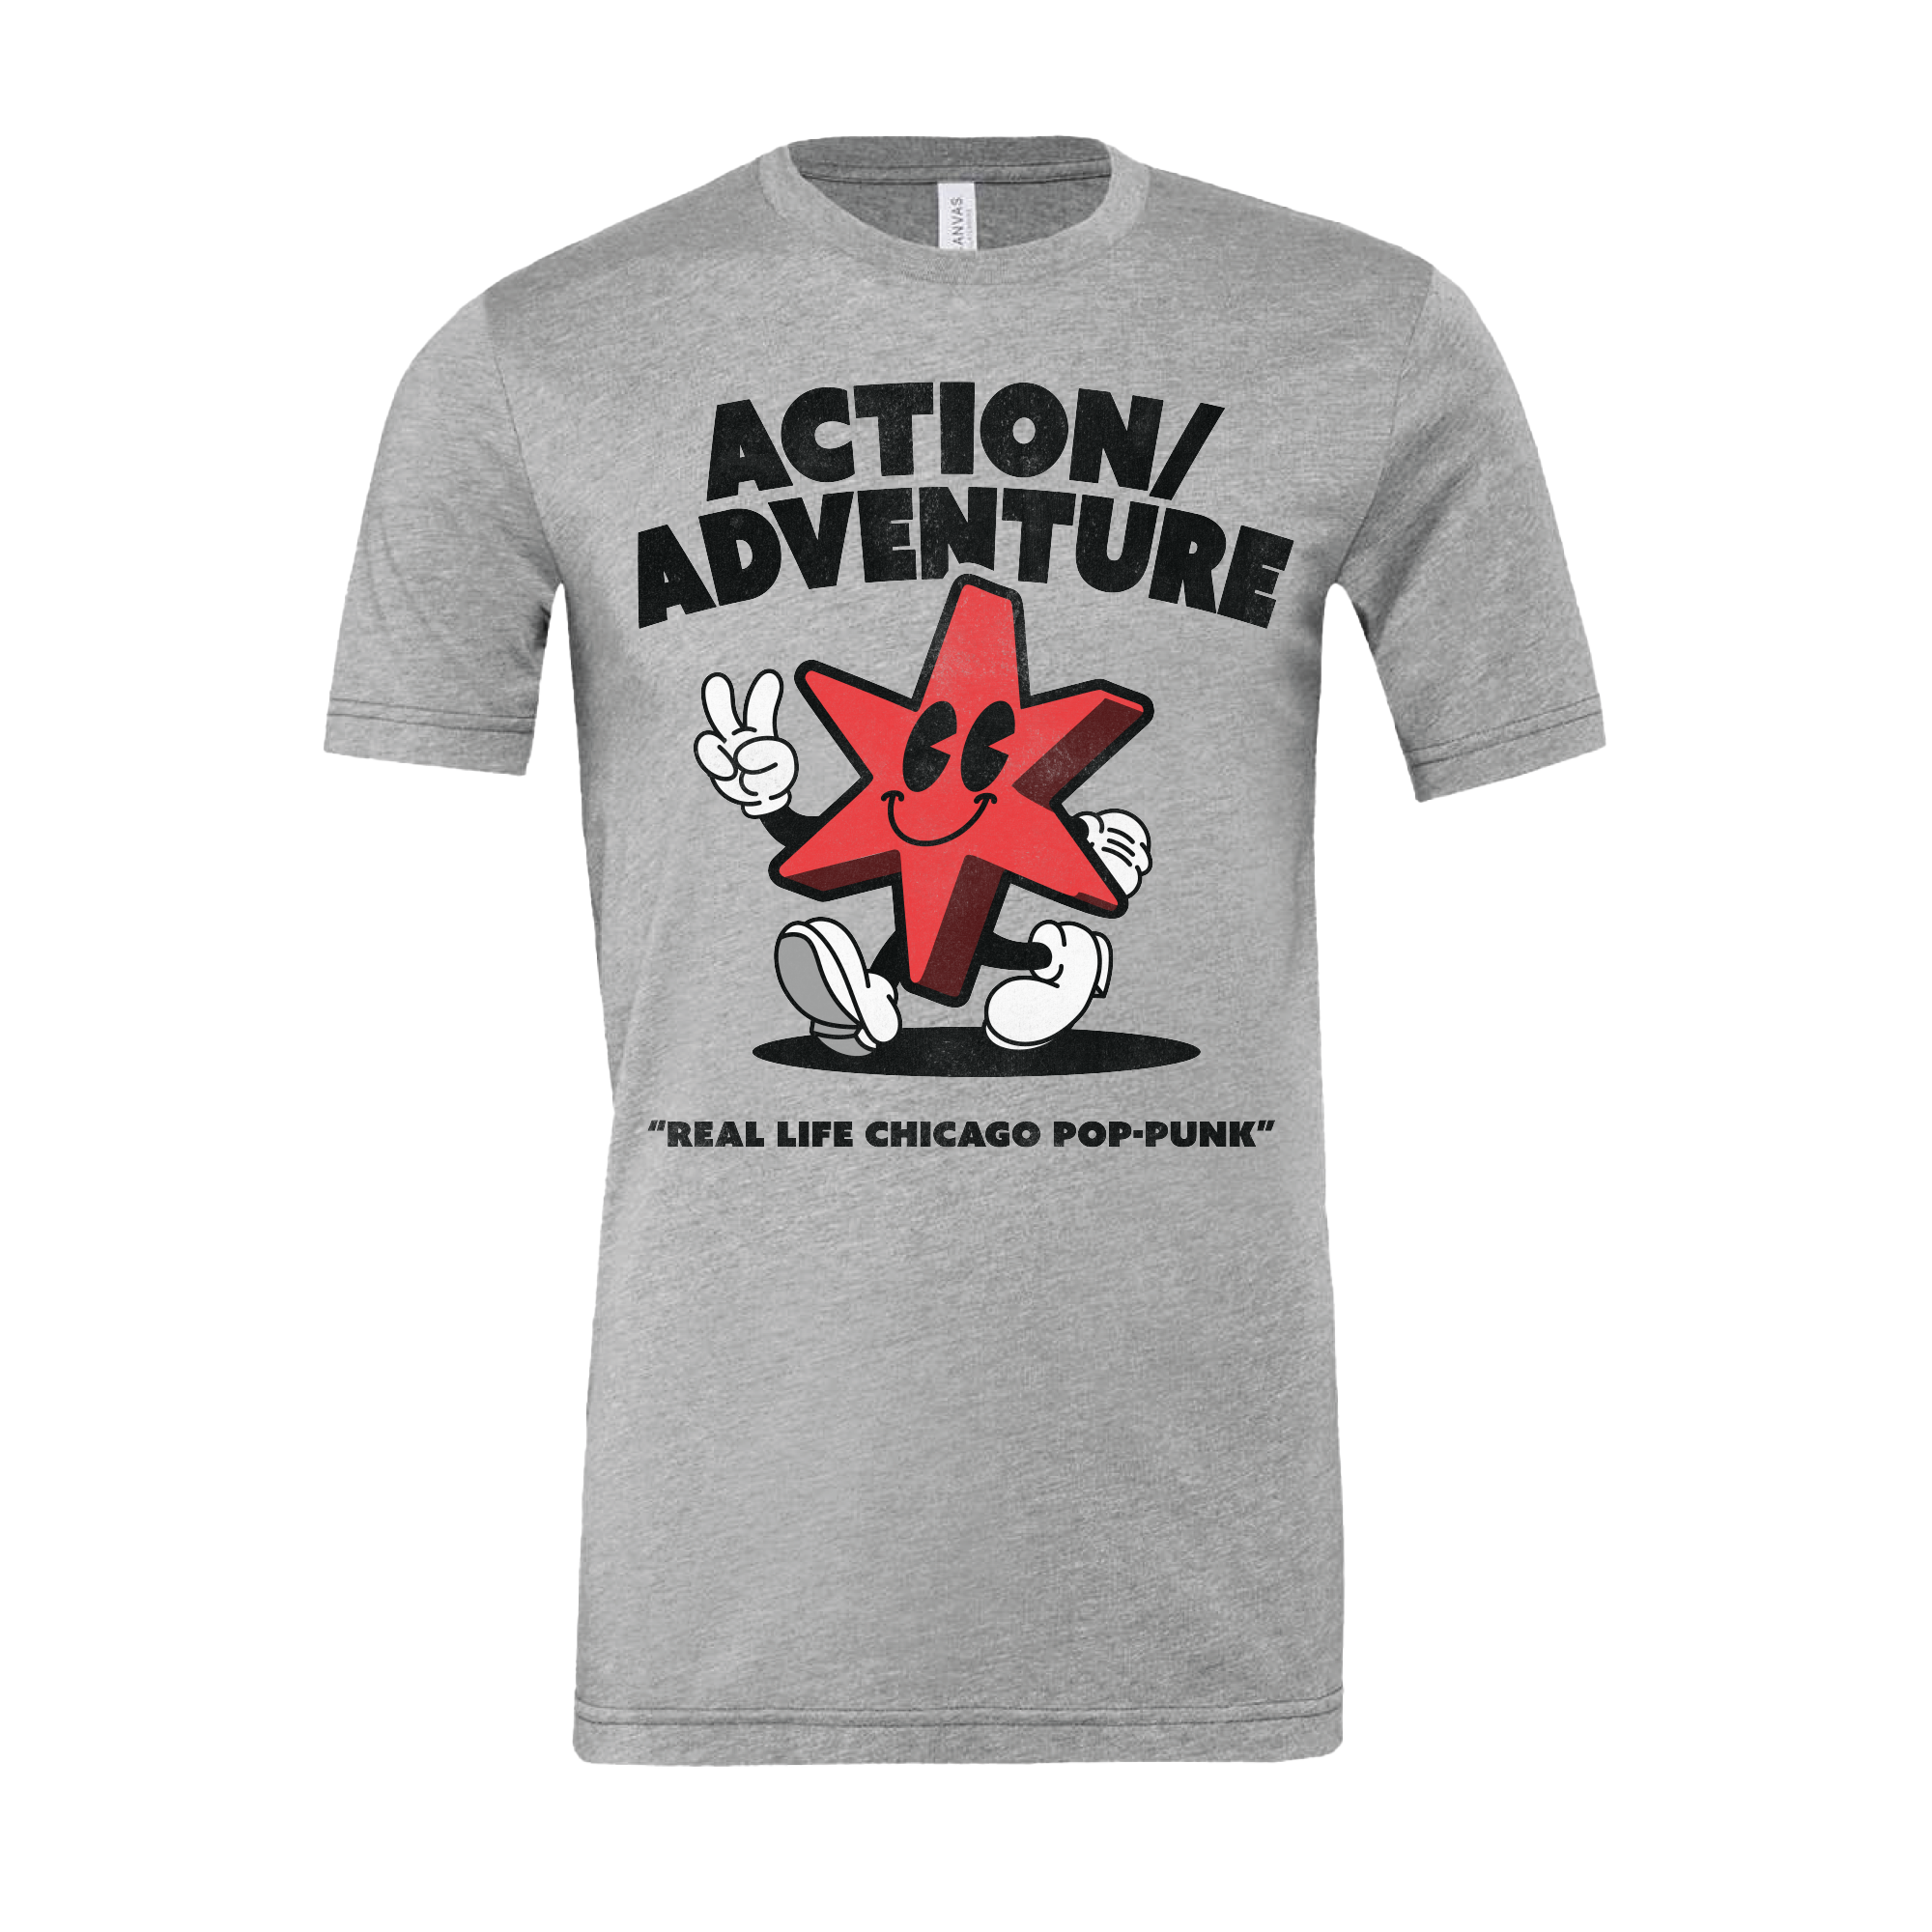 Action/Adventure - Chicago Star T-Shirt